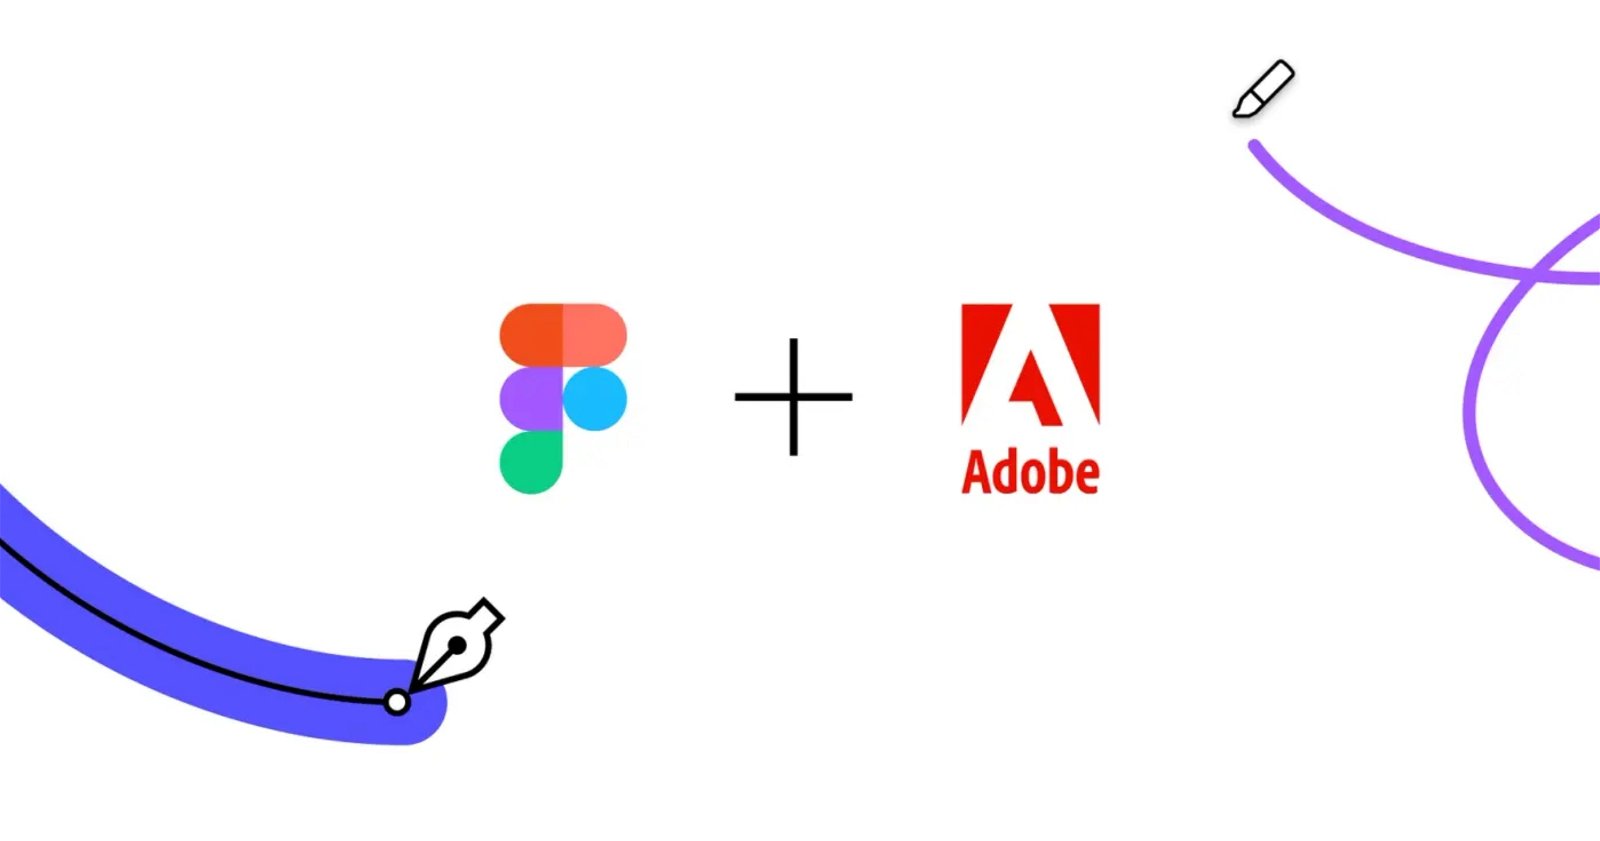 Adobe va a comprar Figma